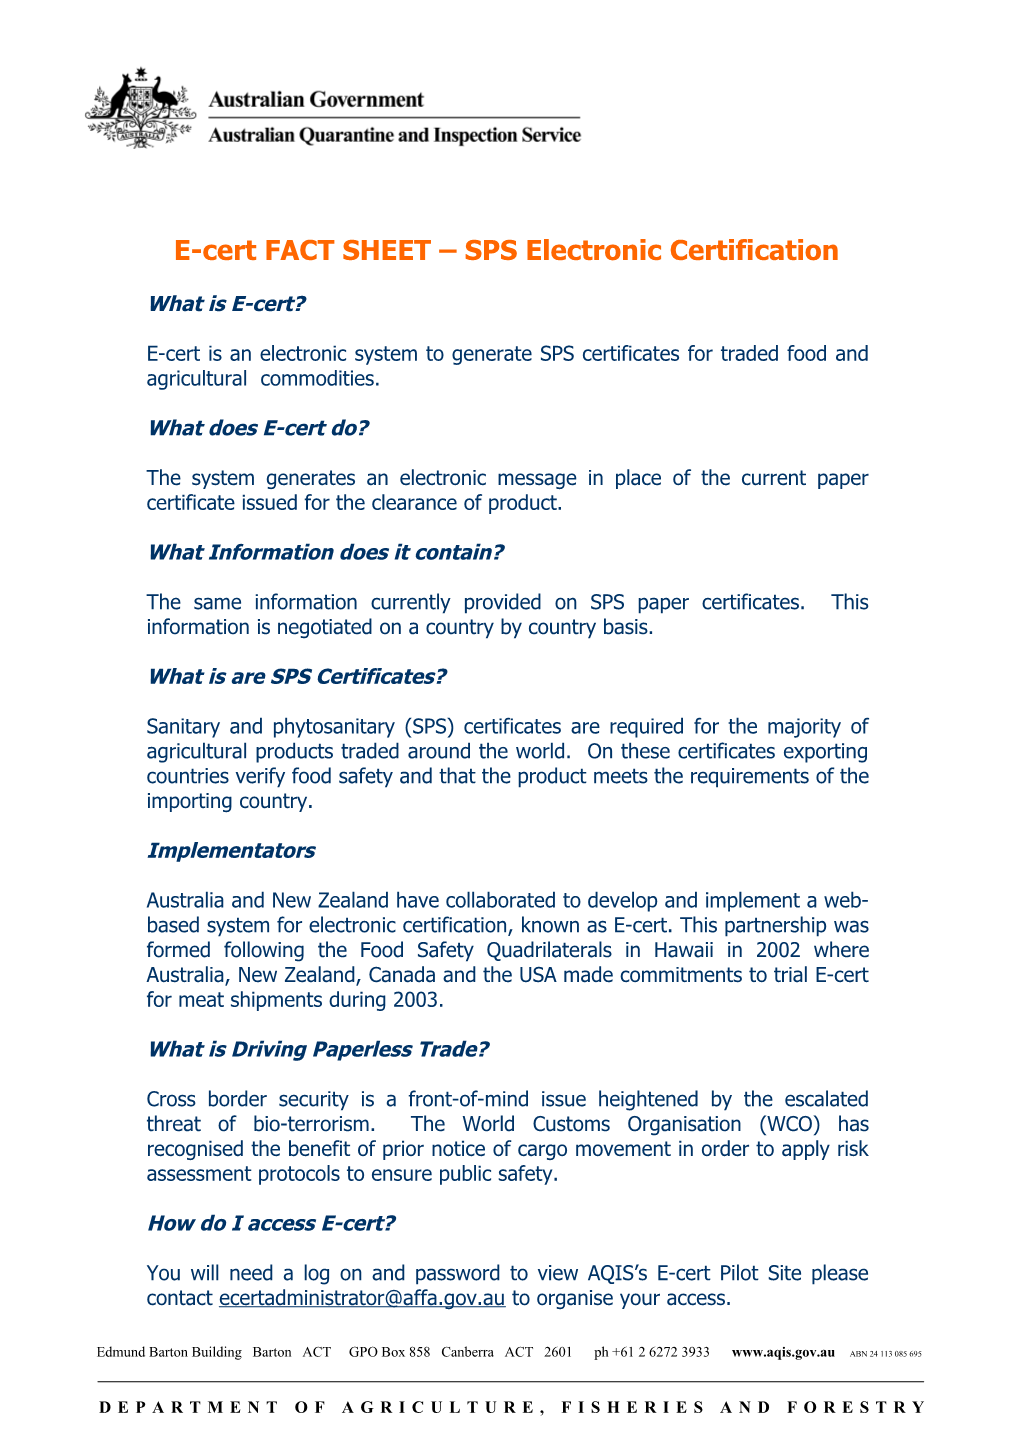 E-Cert FACT SHEET SPS Electronic Certification